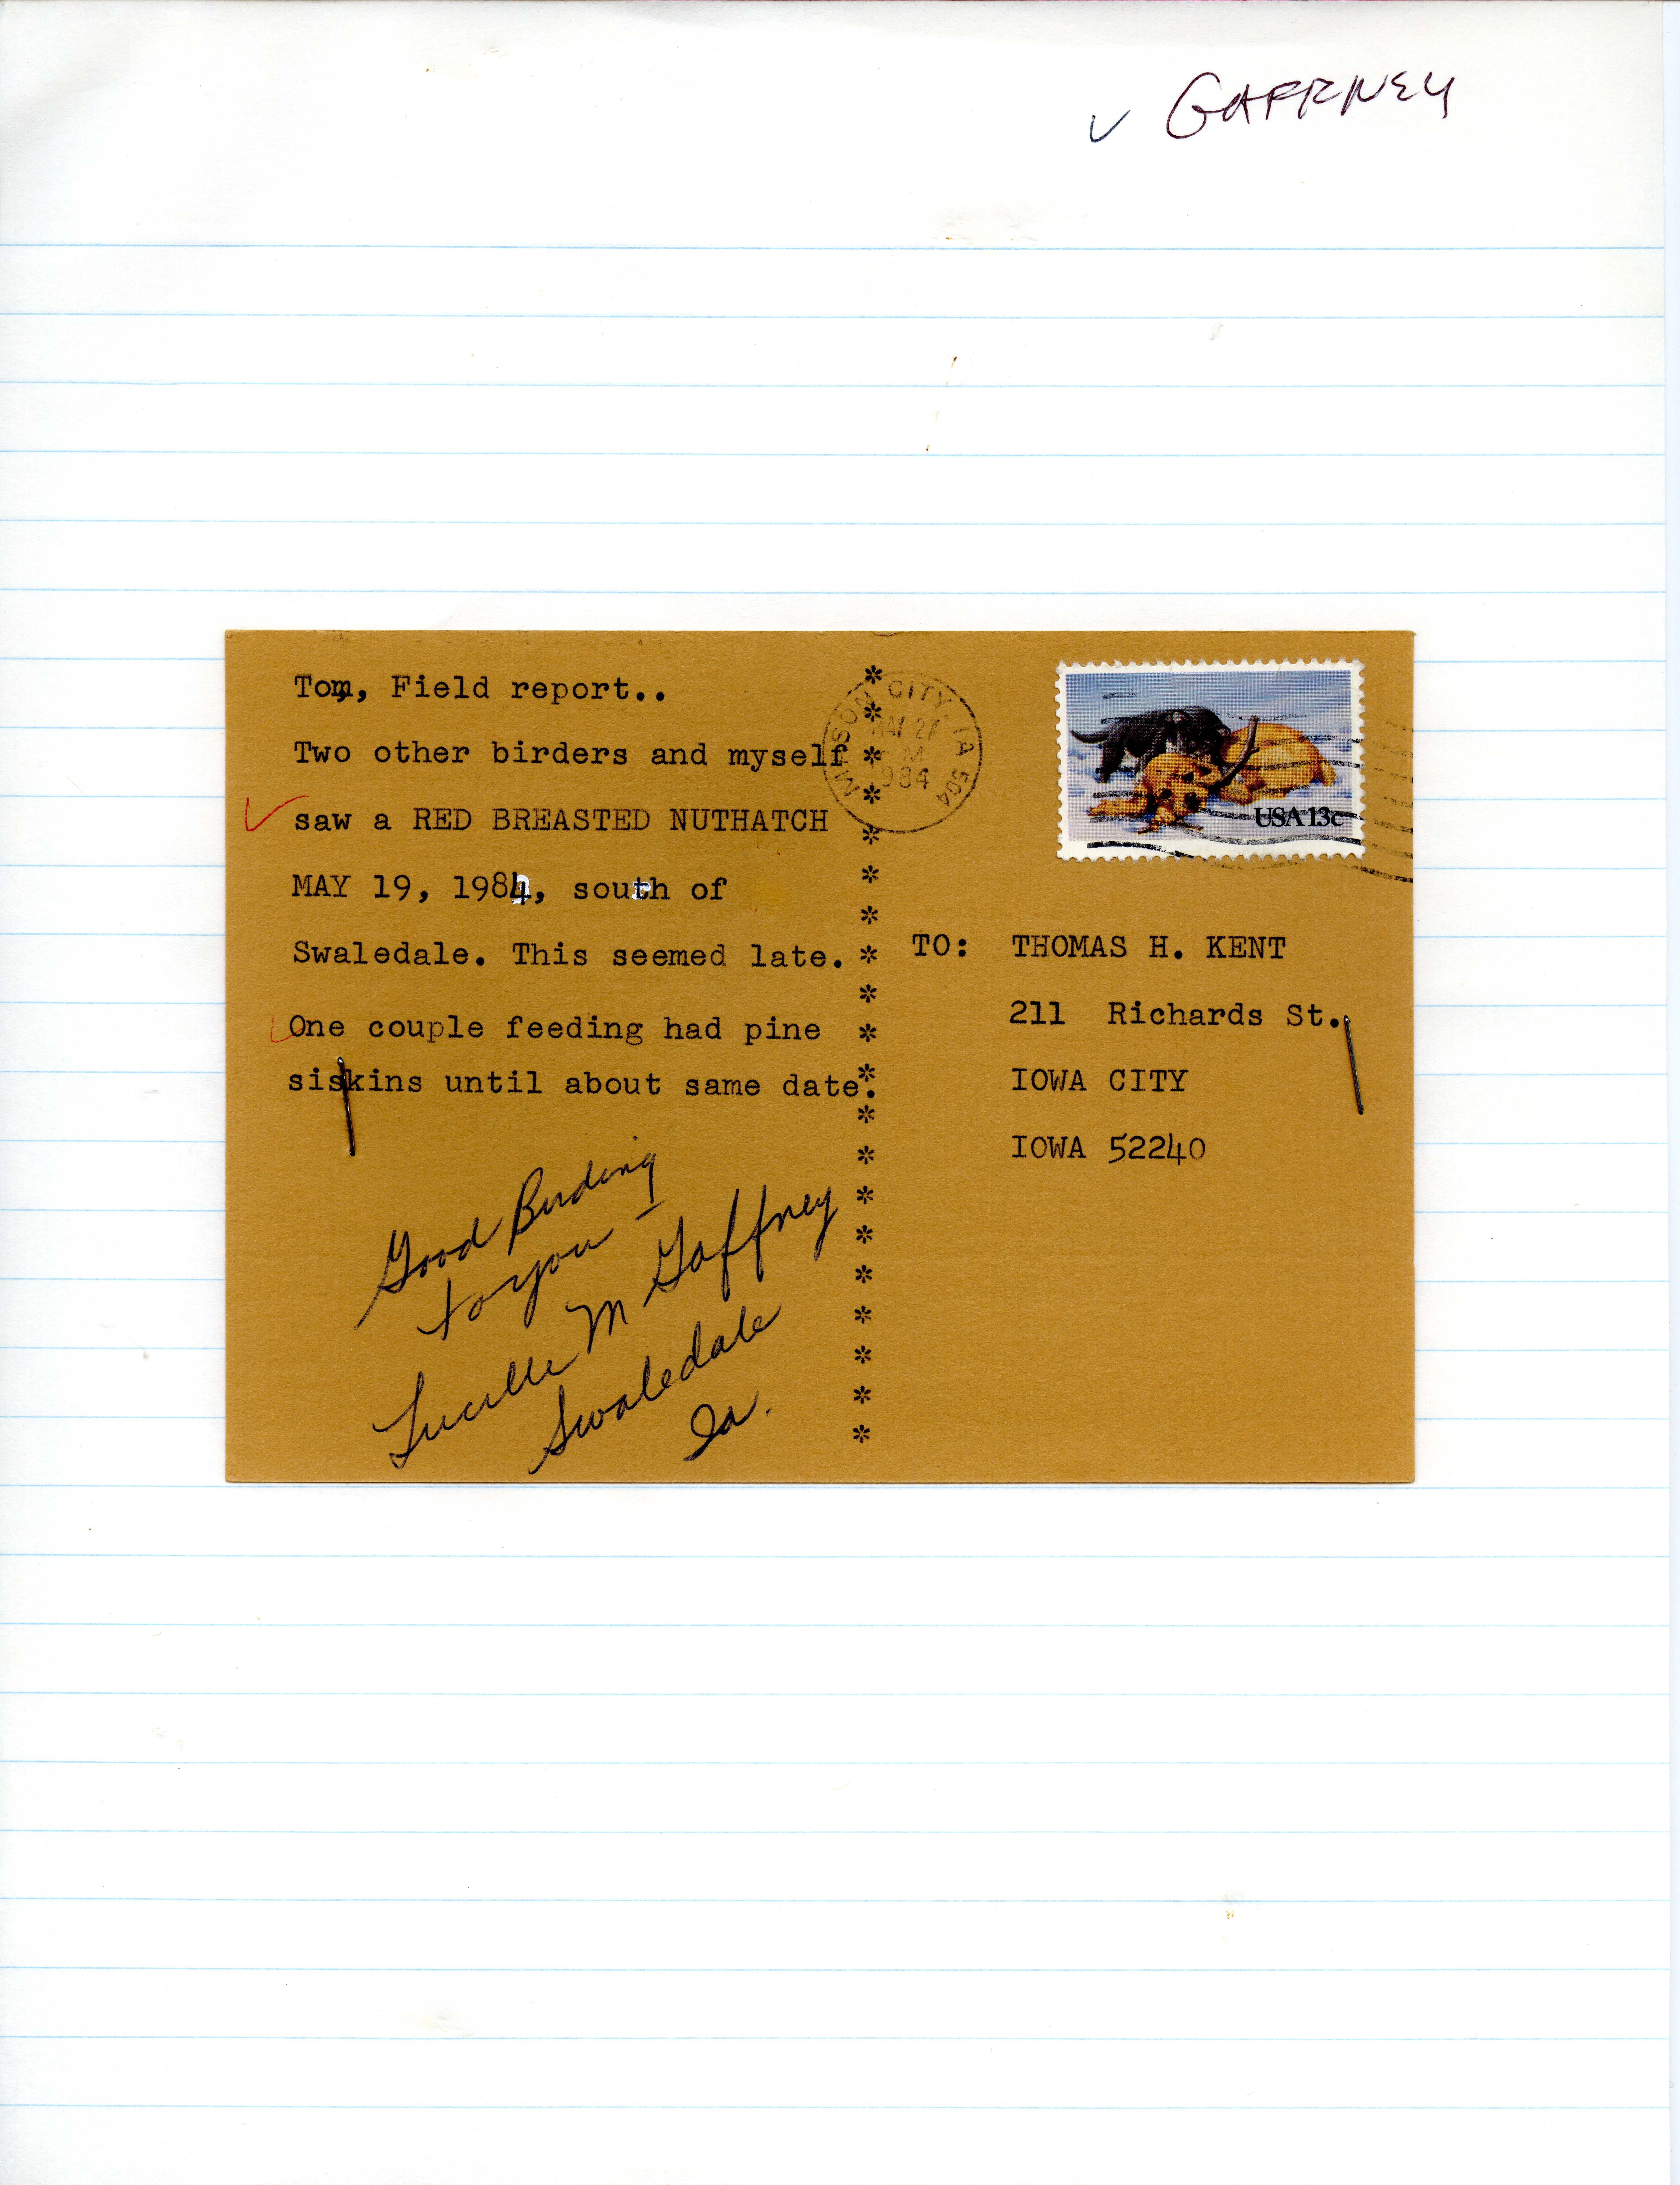 Lucille M. Gaffney postcard to Thomas H. Kent regarding bird sightings in Swaledale, Iowa, May 19, 1984